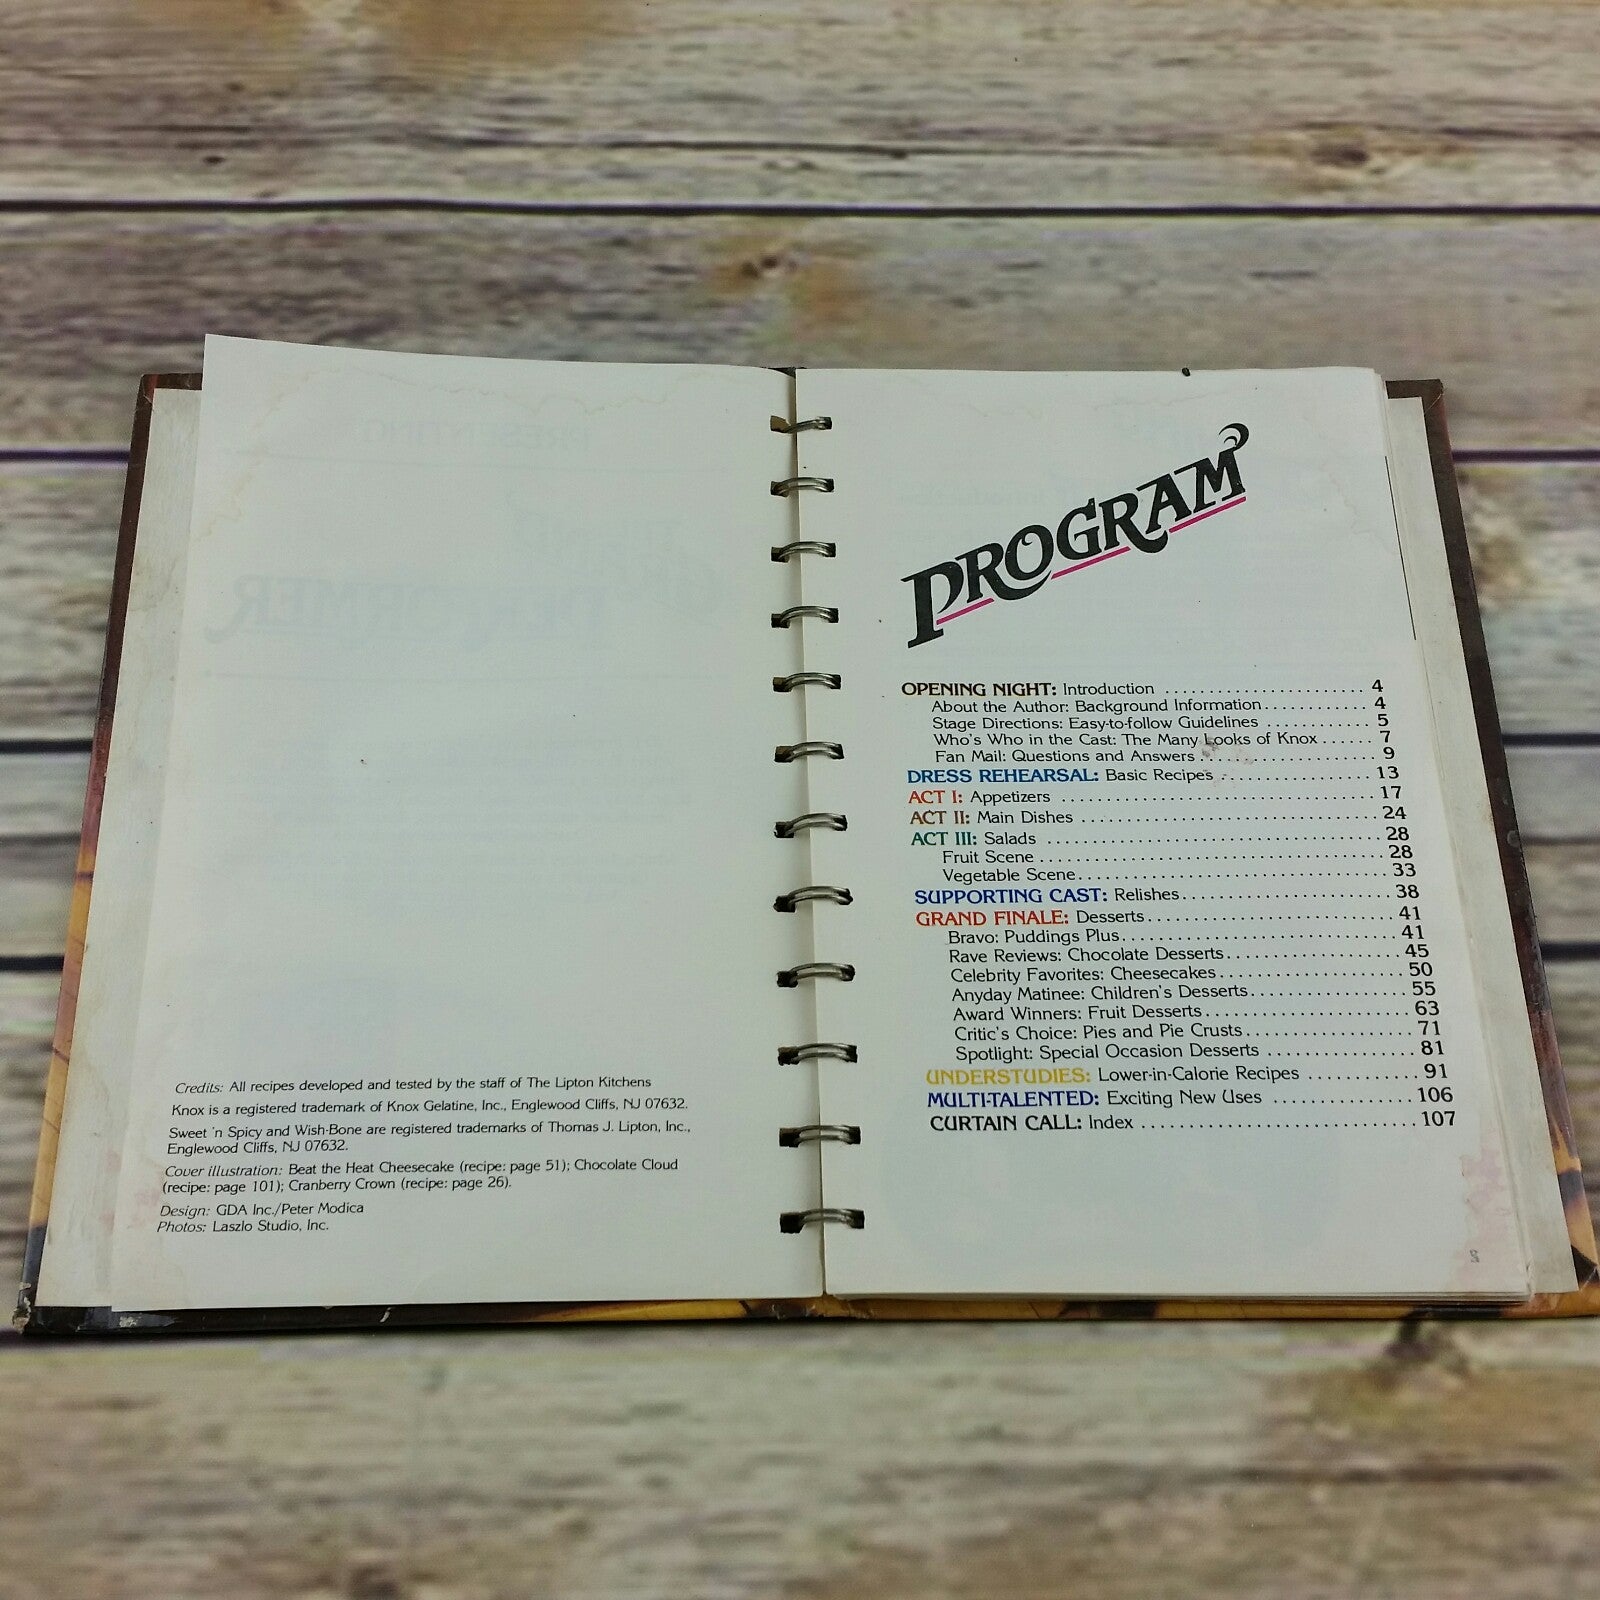 Vintage Cookbook The Grand Performer Knox Gelatine Promo Recipes 1970s Spiral Bound Hardcover - At Grandma's Table